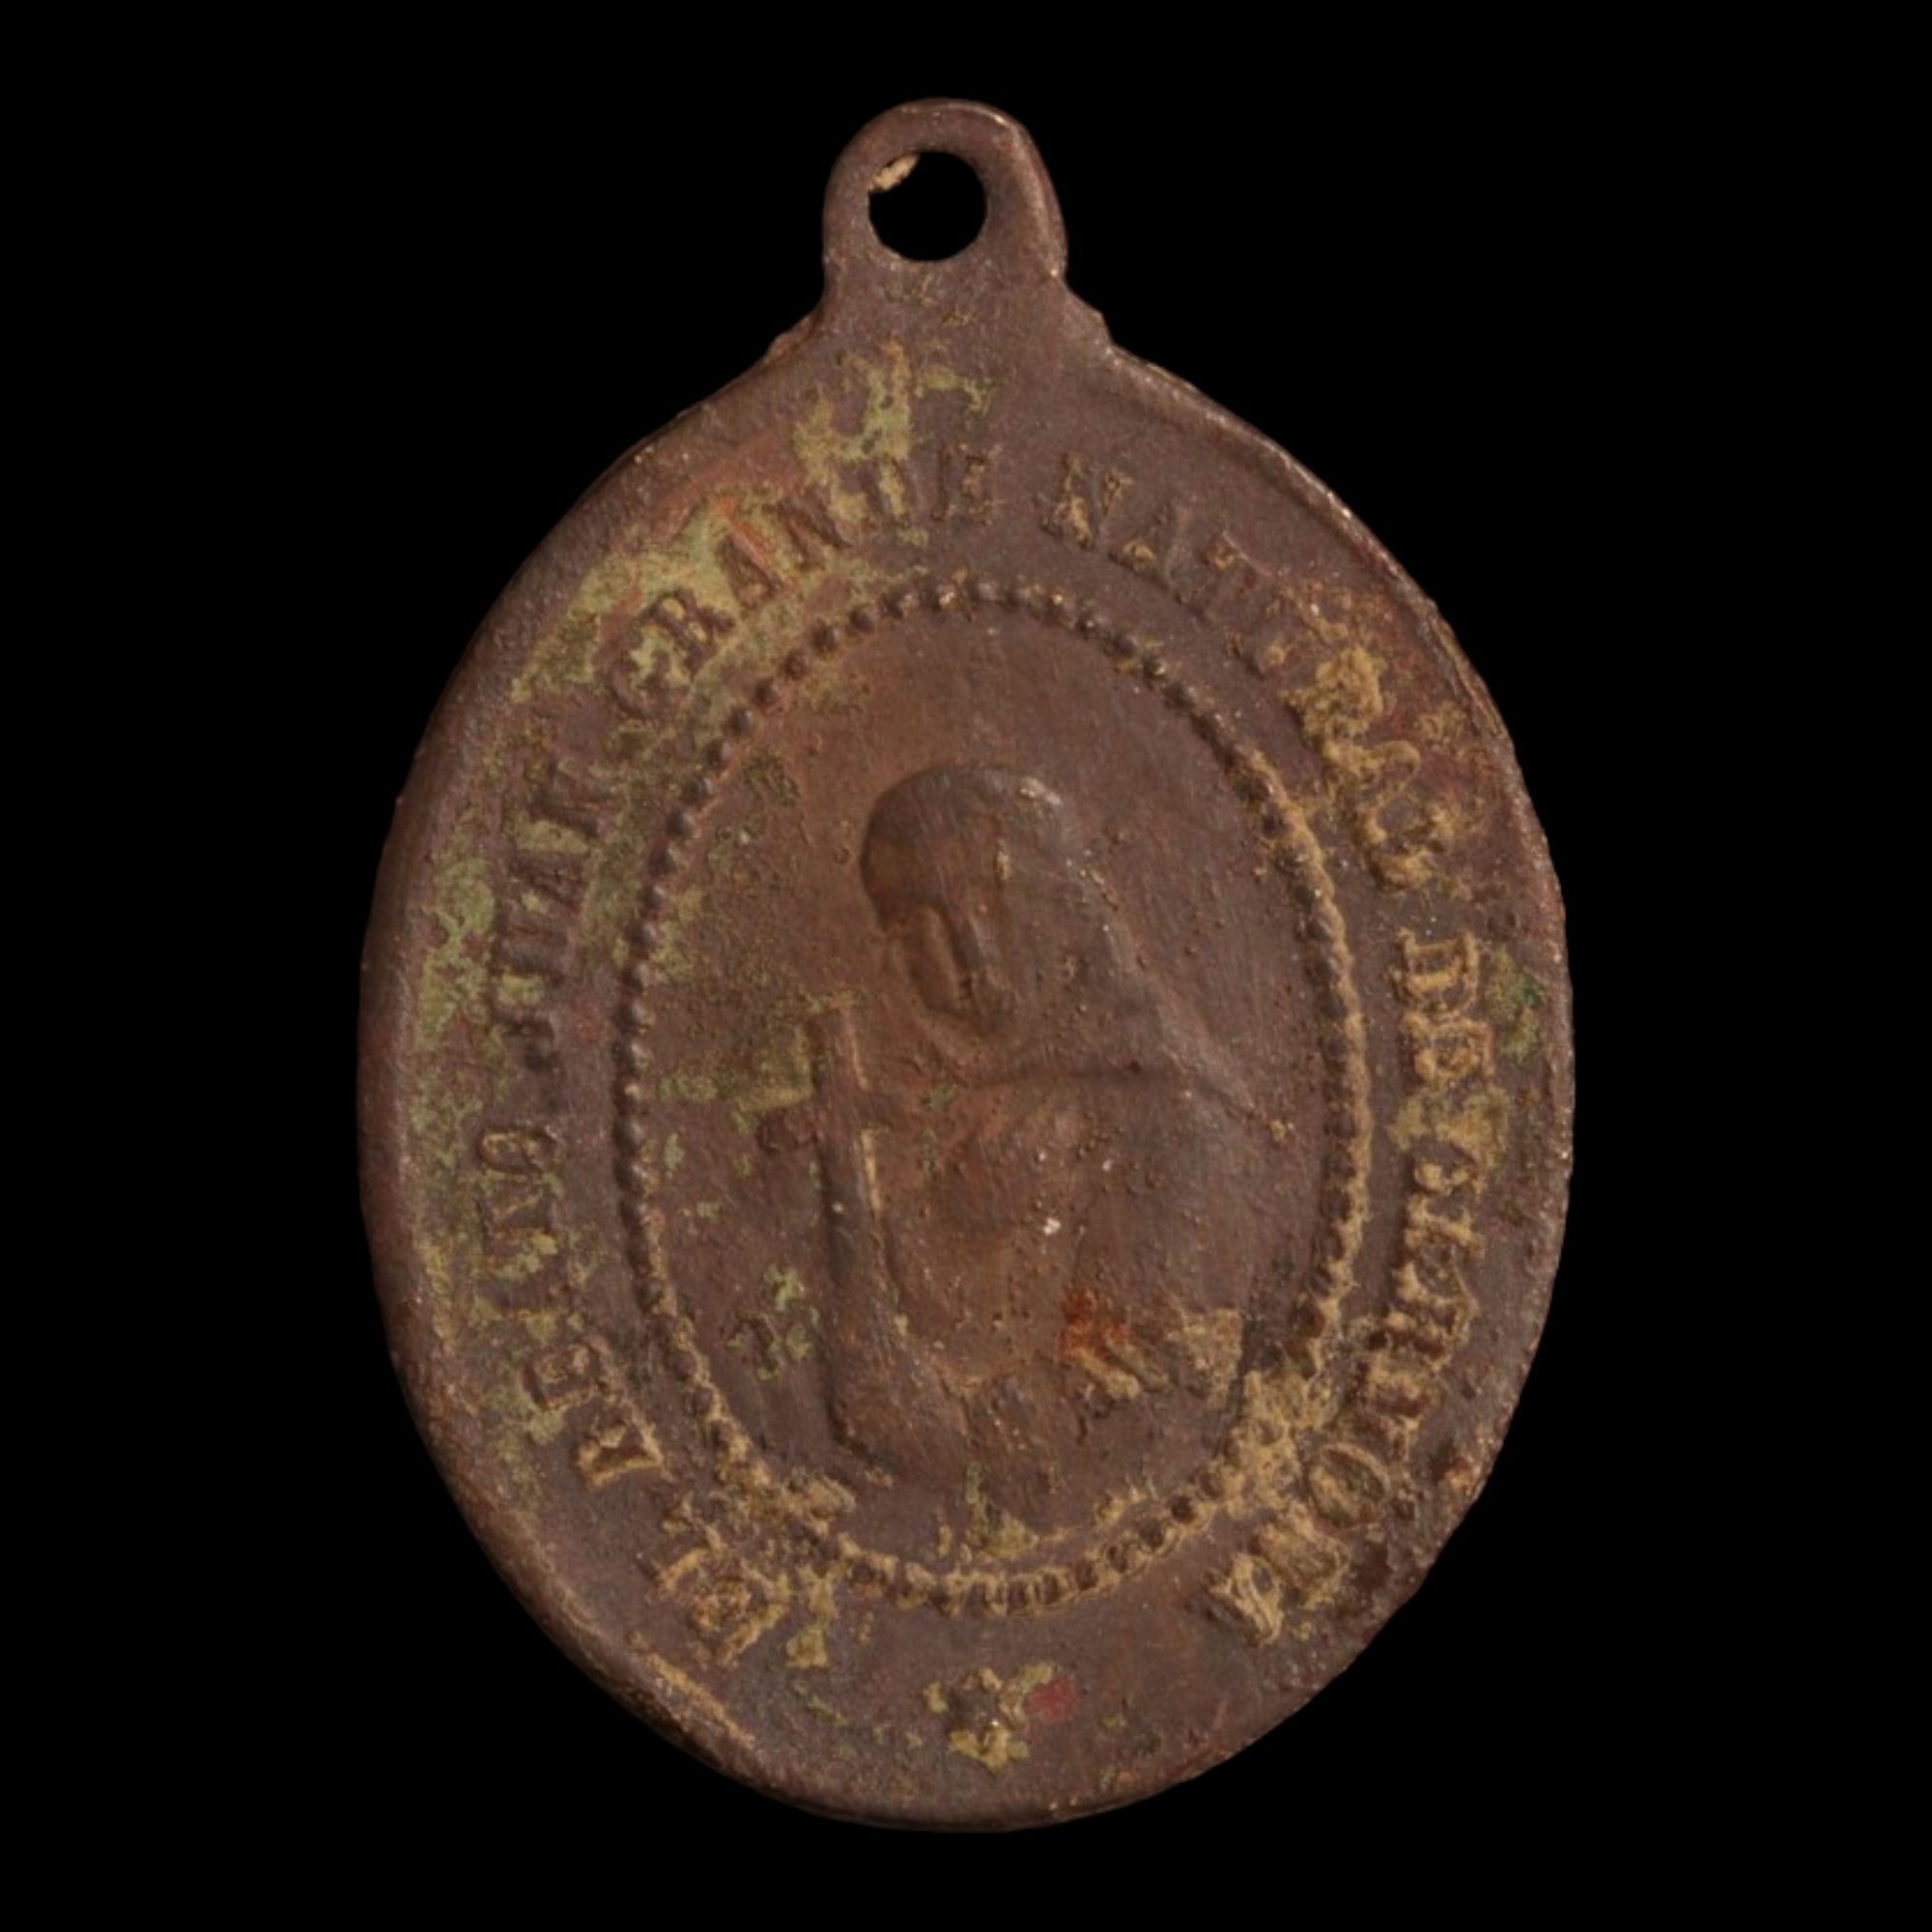 Religious Medal, Catholic Church, St. John Grande, 29mm - 1500s to 1700s - Spanish Empire